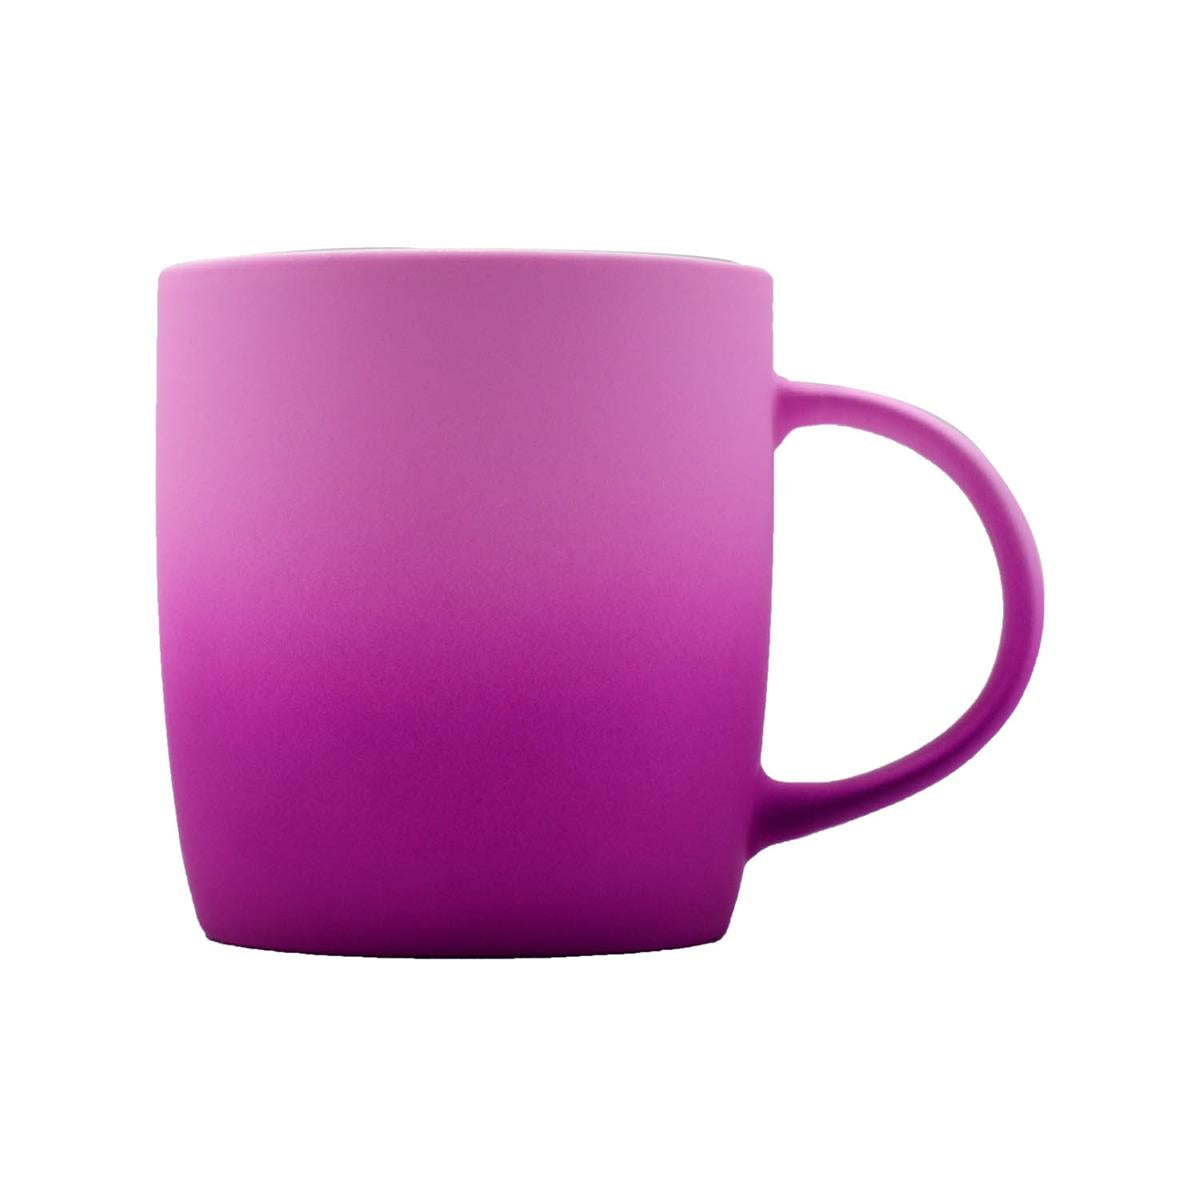 Ceramic Coffee or Tea Mug with handle - 325ml (BPY173-B)